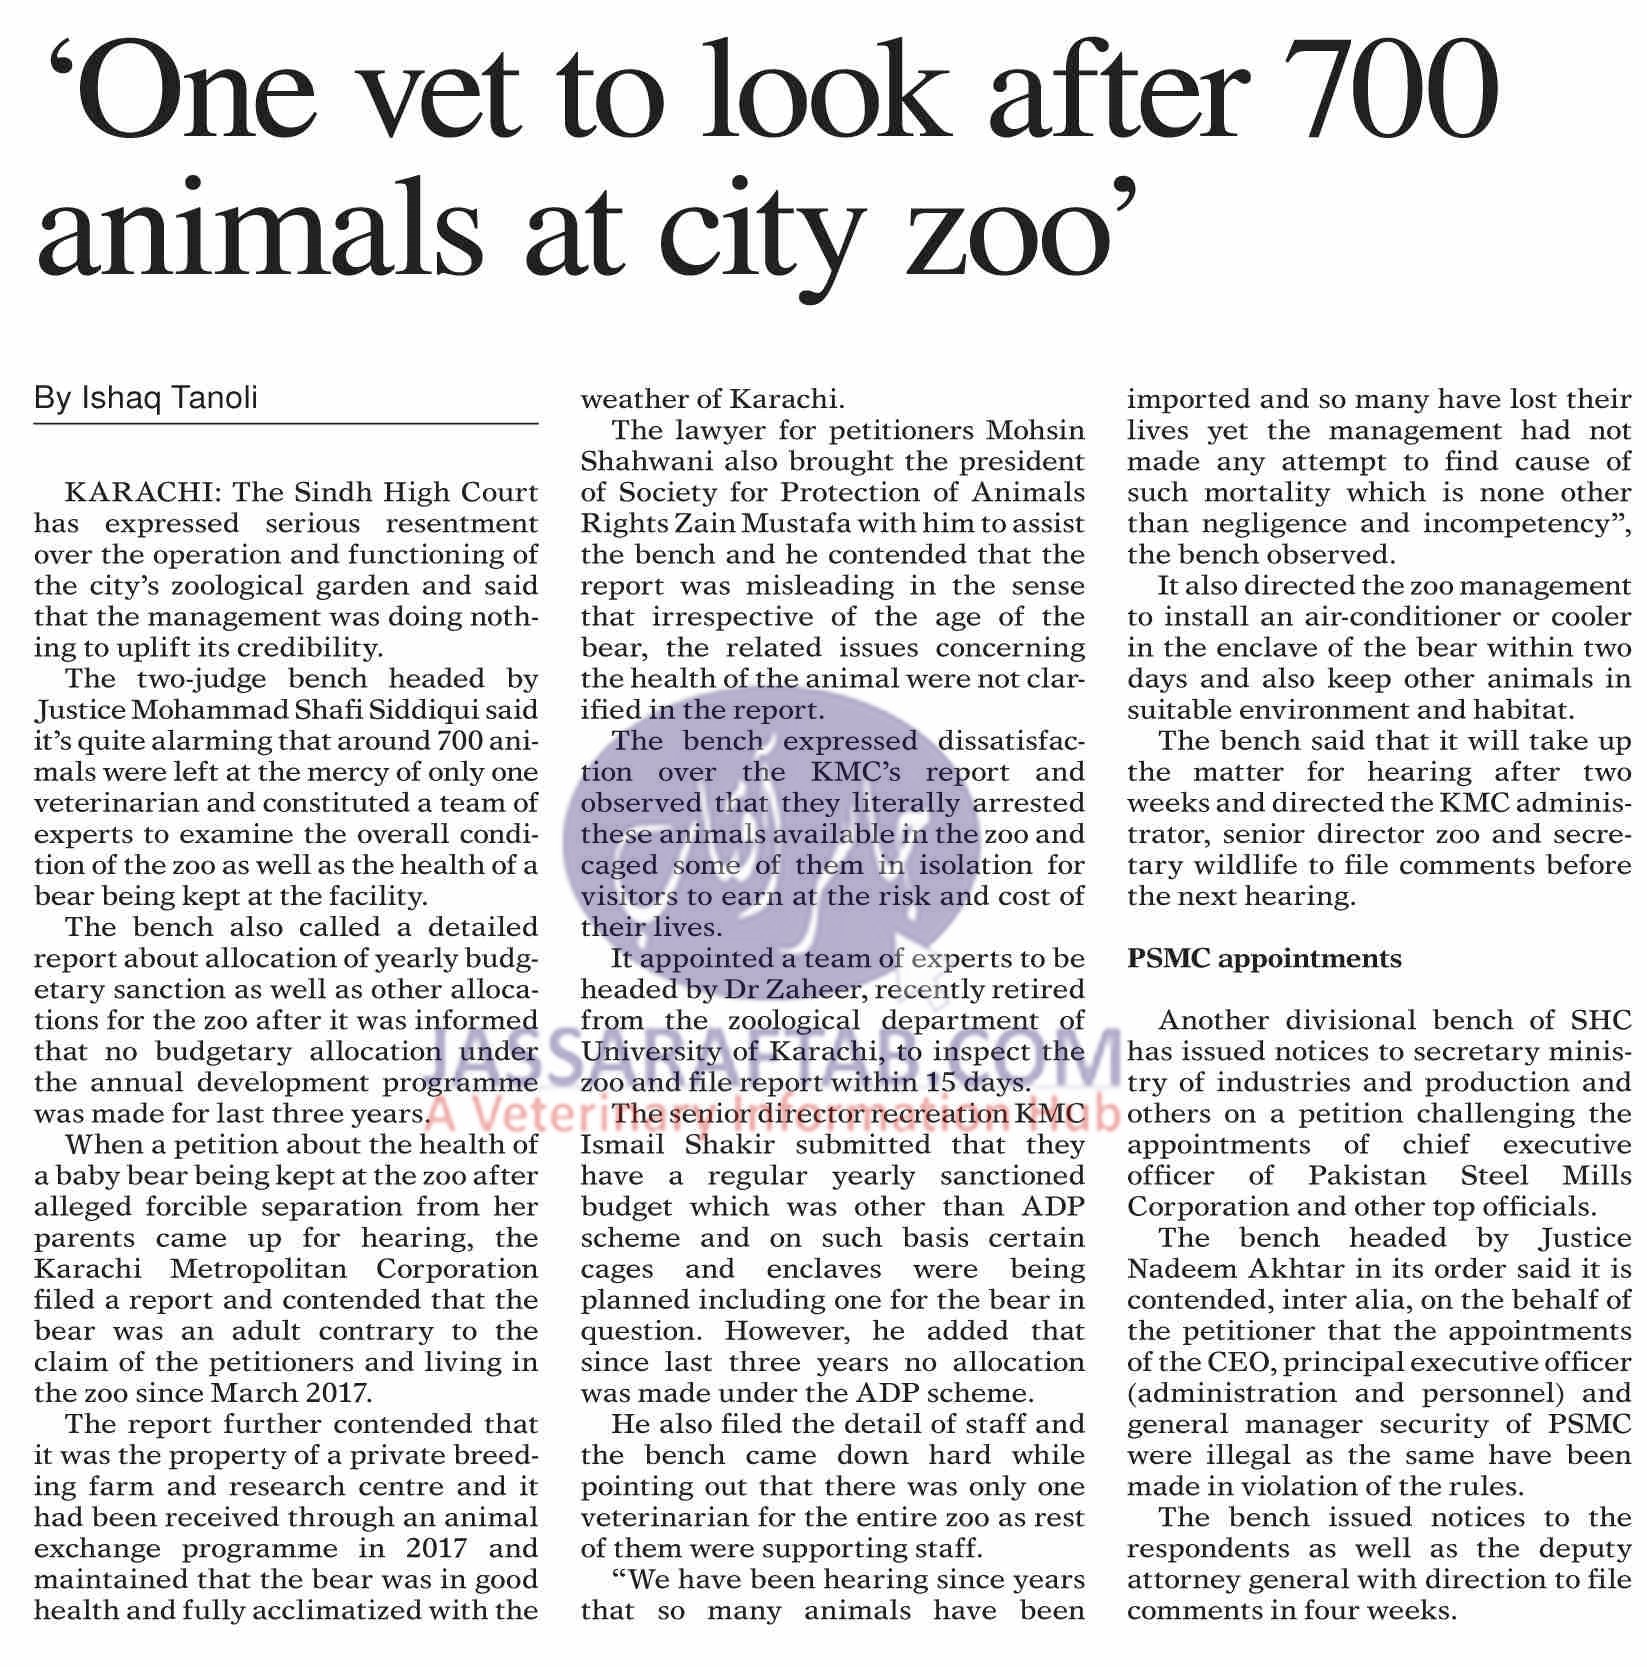  bear cub condition in Karachi Zoo